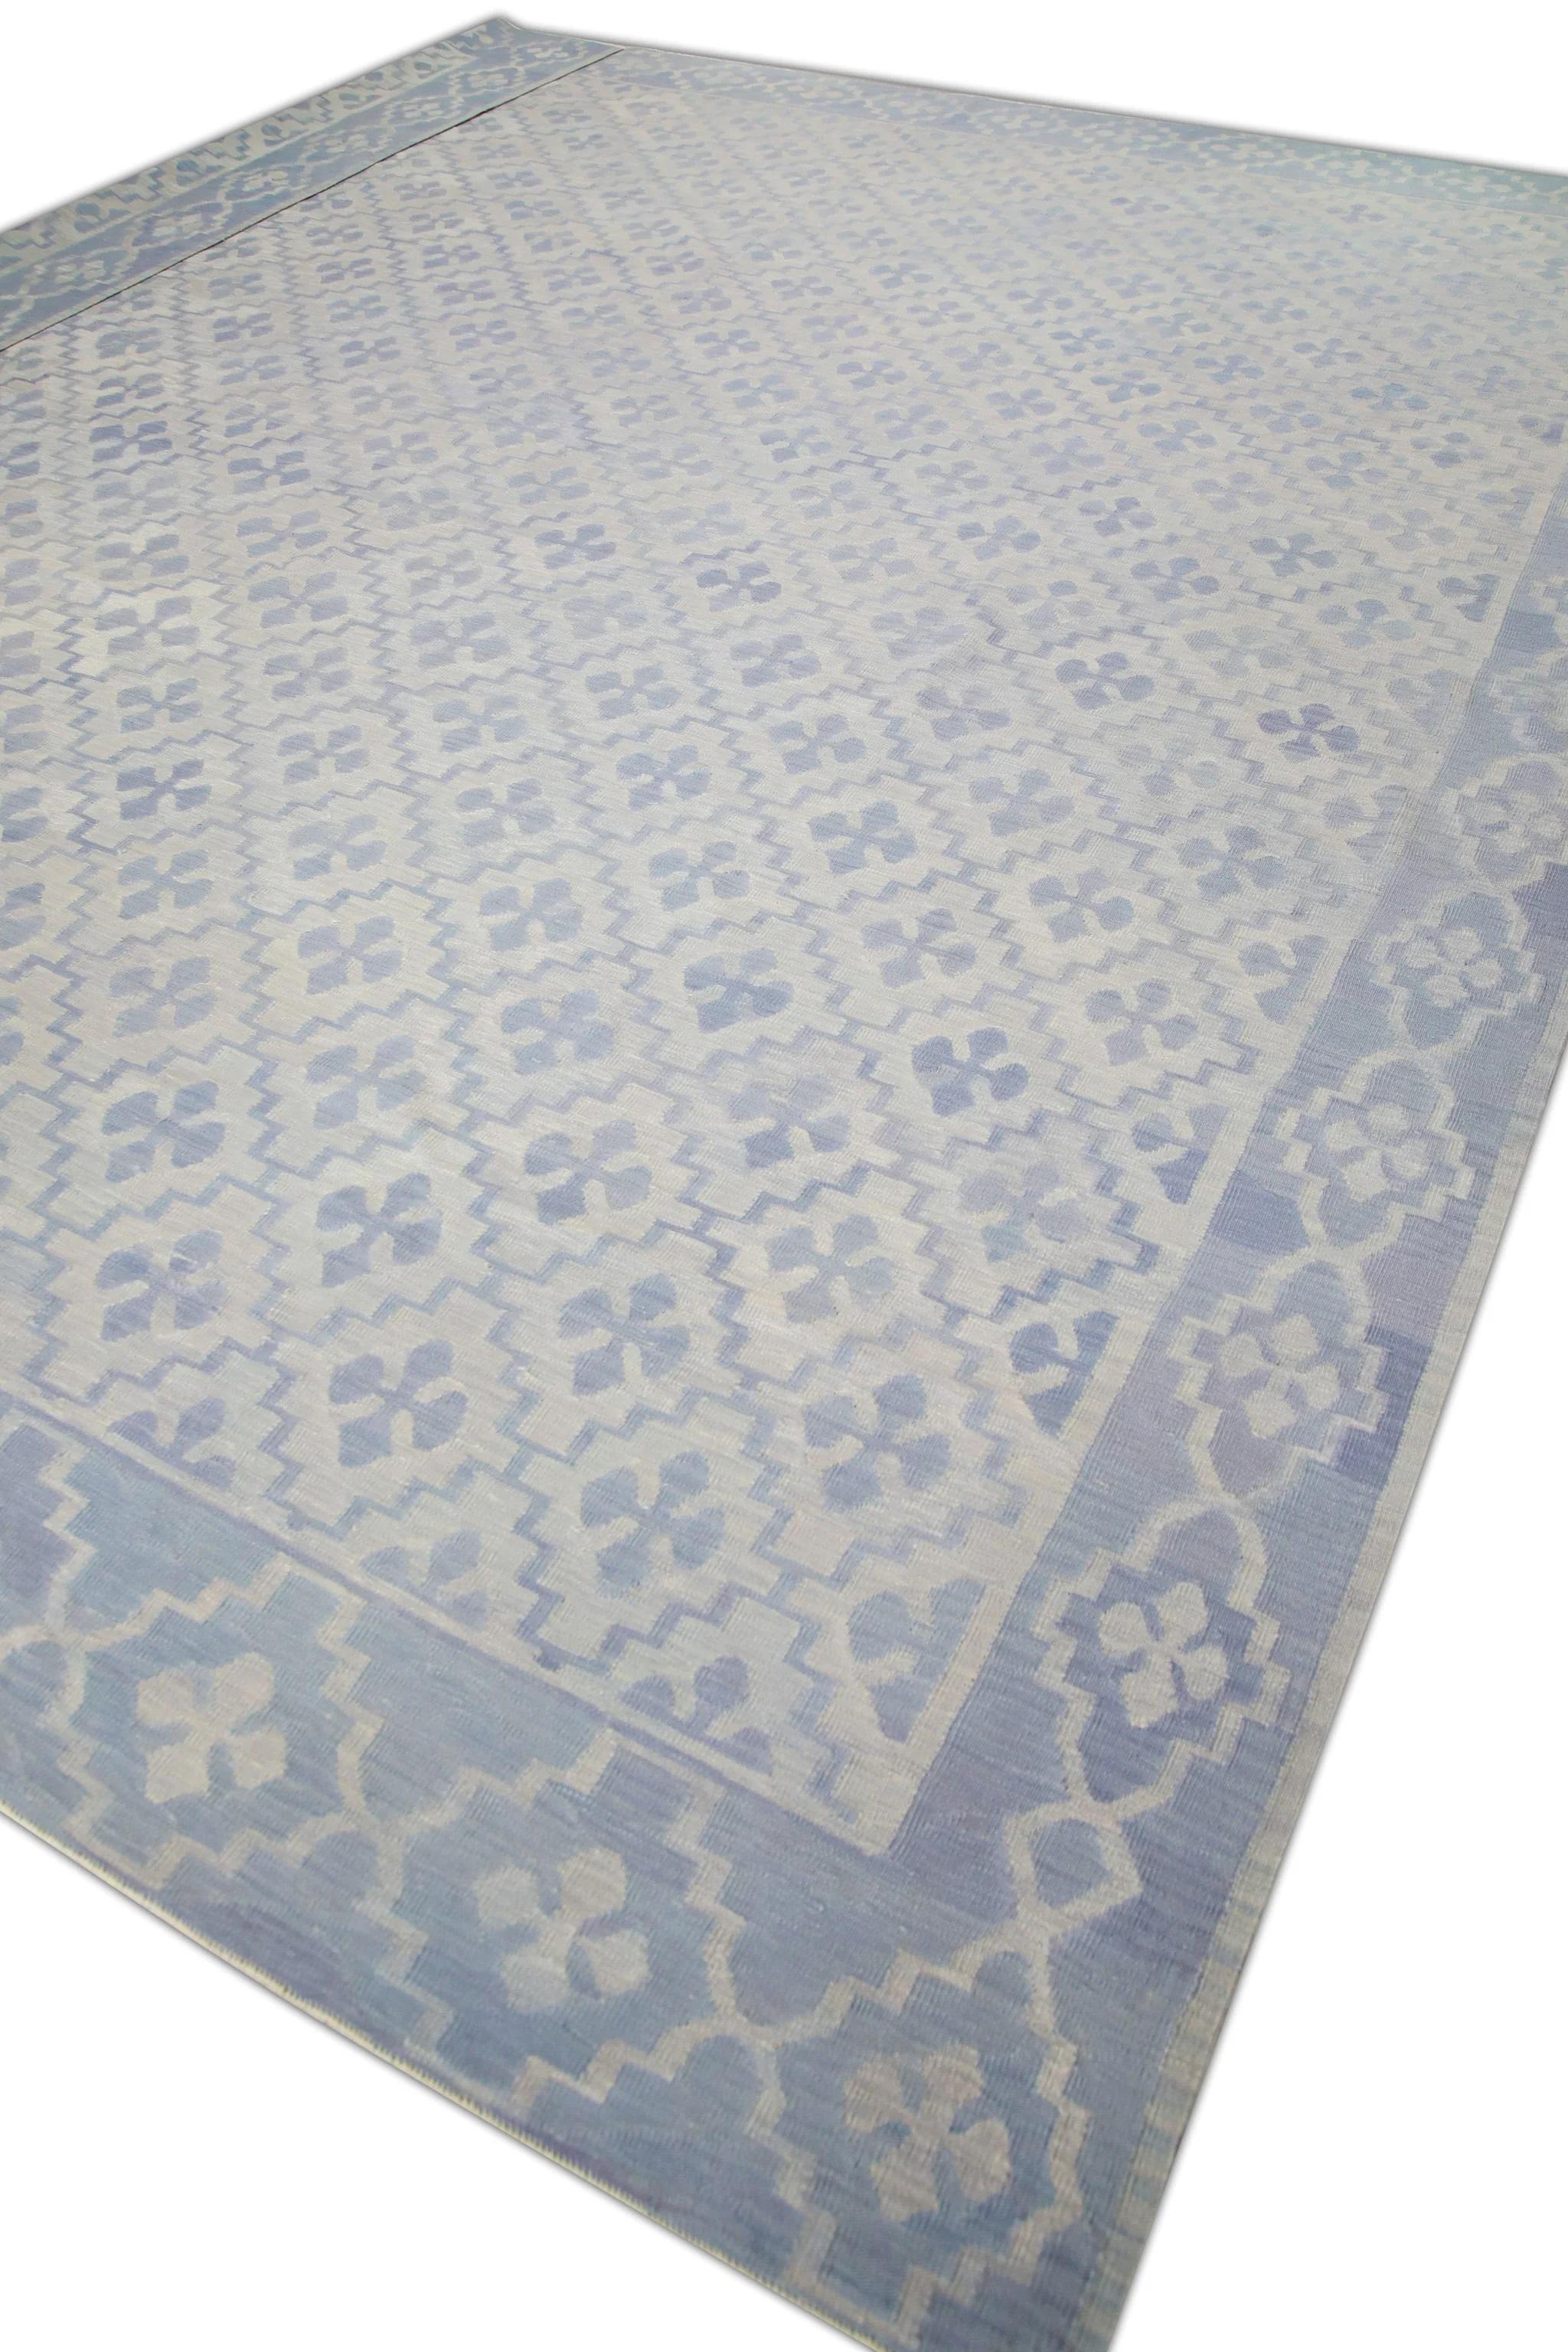 Contemporary Modern Flatweave Handmade Wool Rug in Blue Geometric Design 14'2